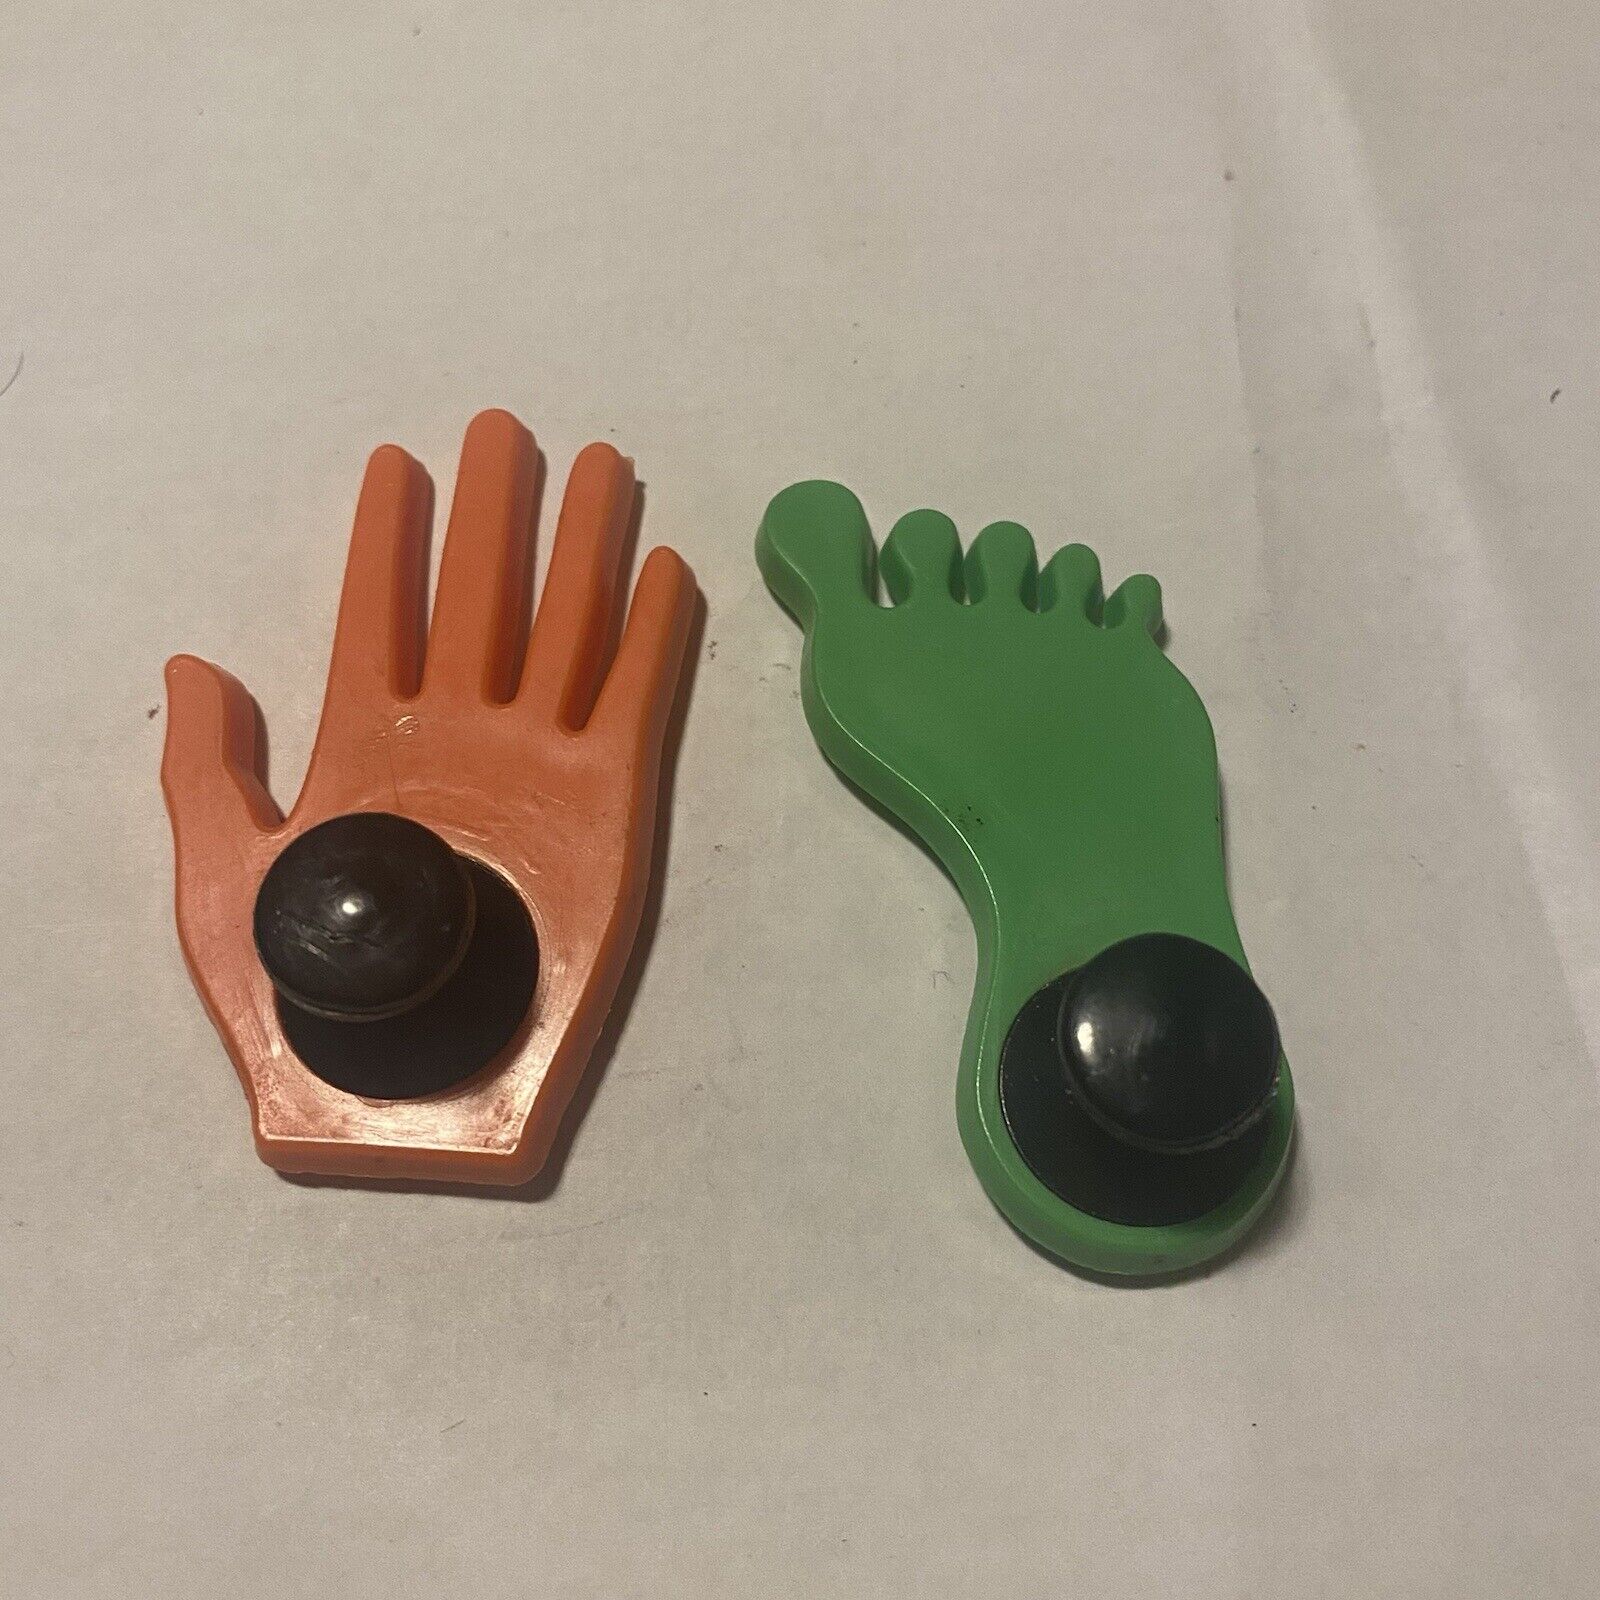 Hand & Foot Magnetic Decorative Memo Holders From Kmart Vintage set of 2